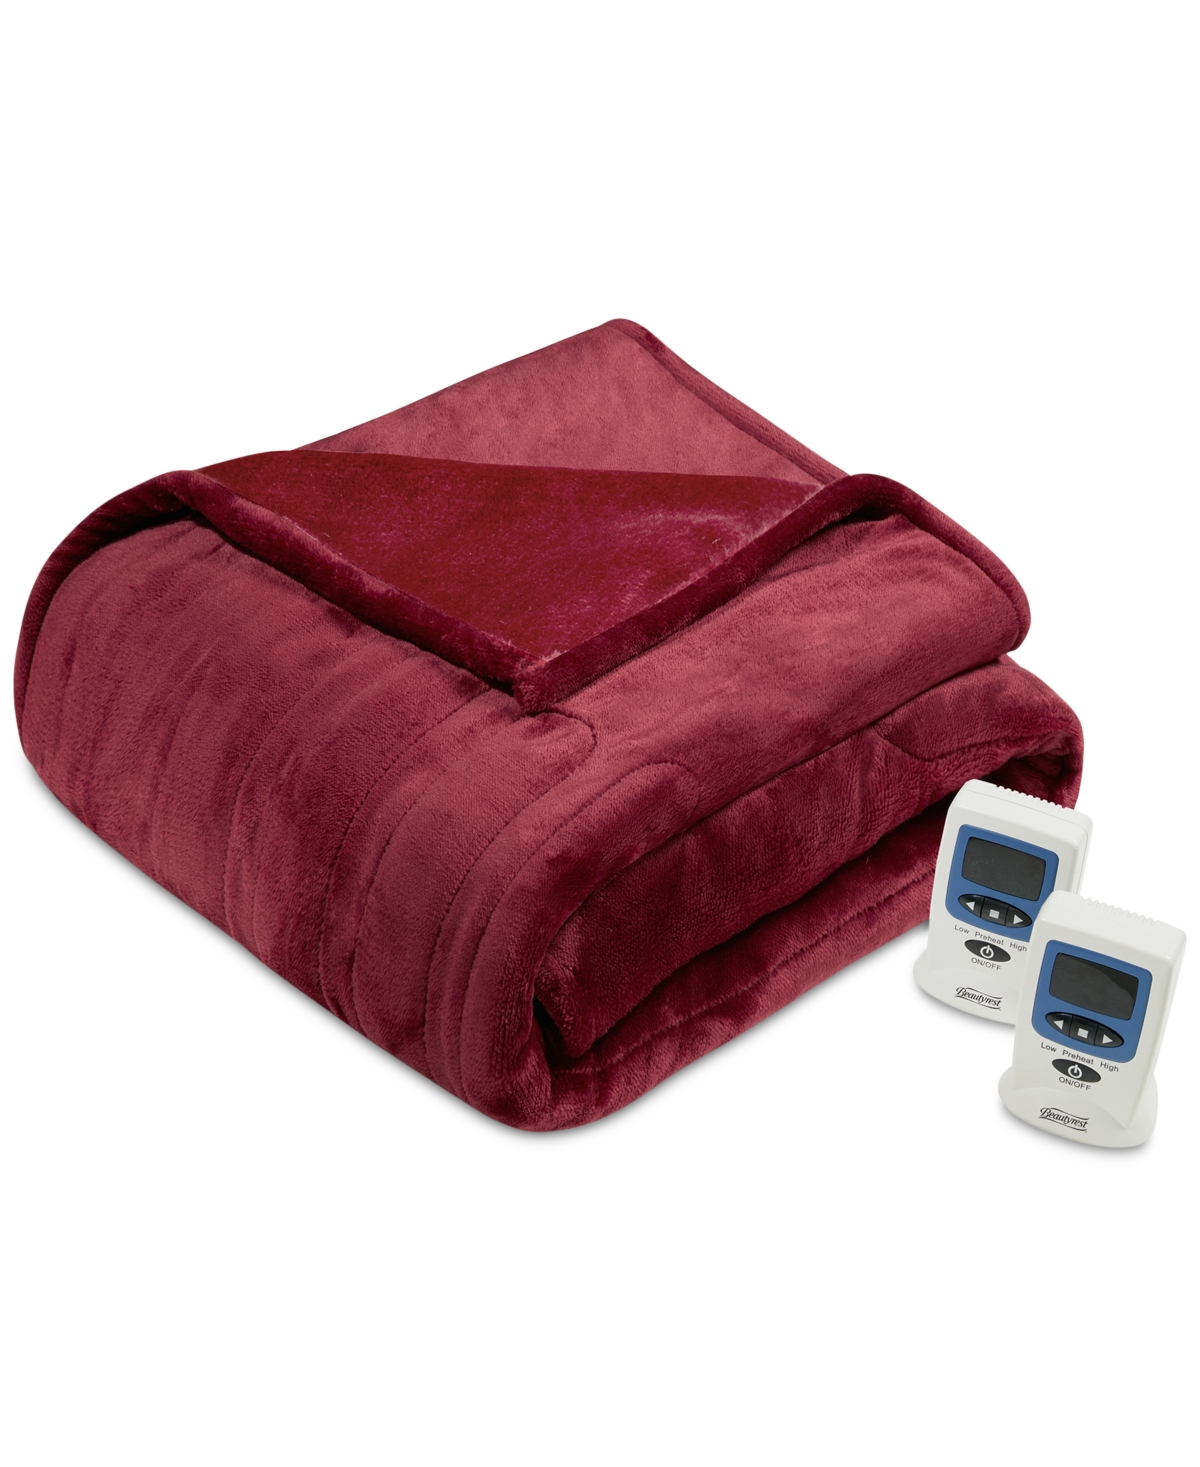 Beautyrest Electric Plush Queen Blanket Bedding In Red